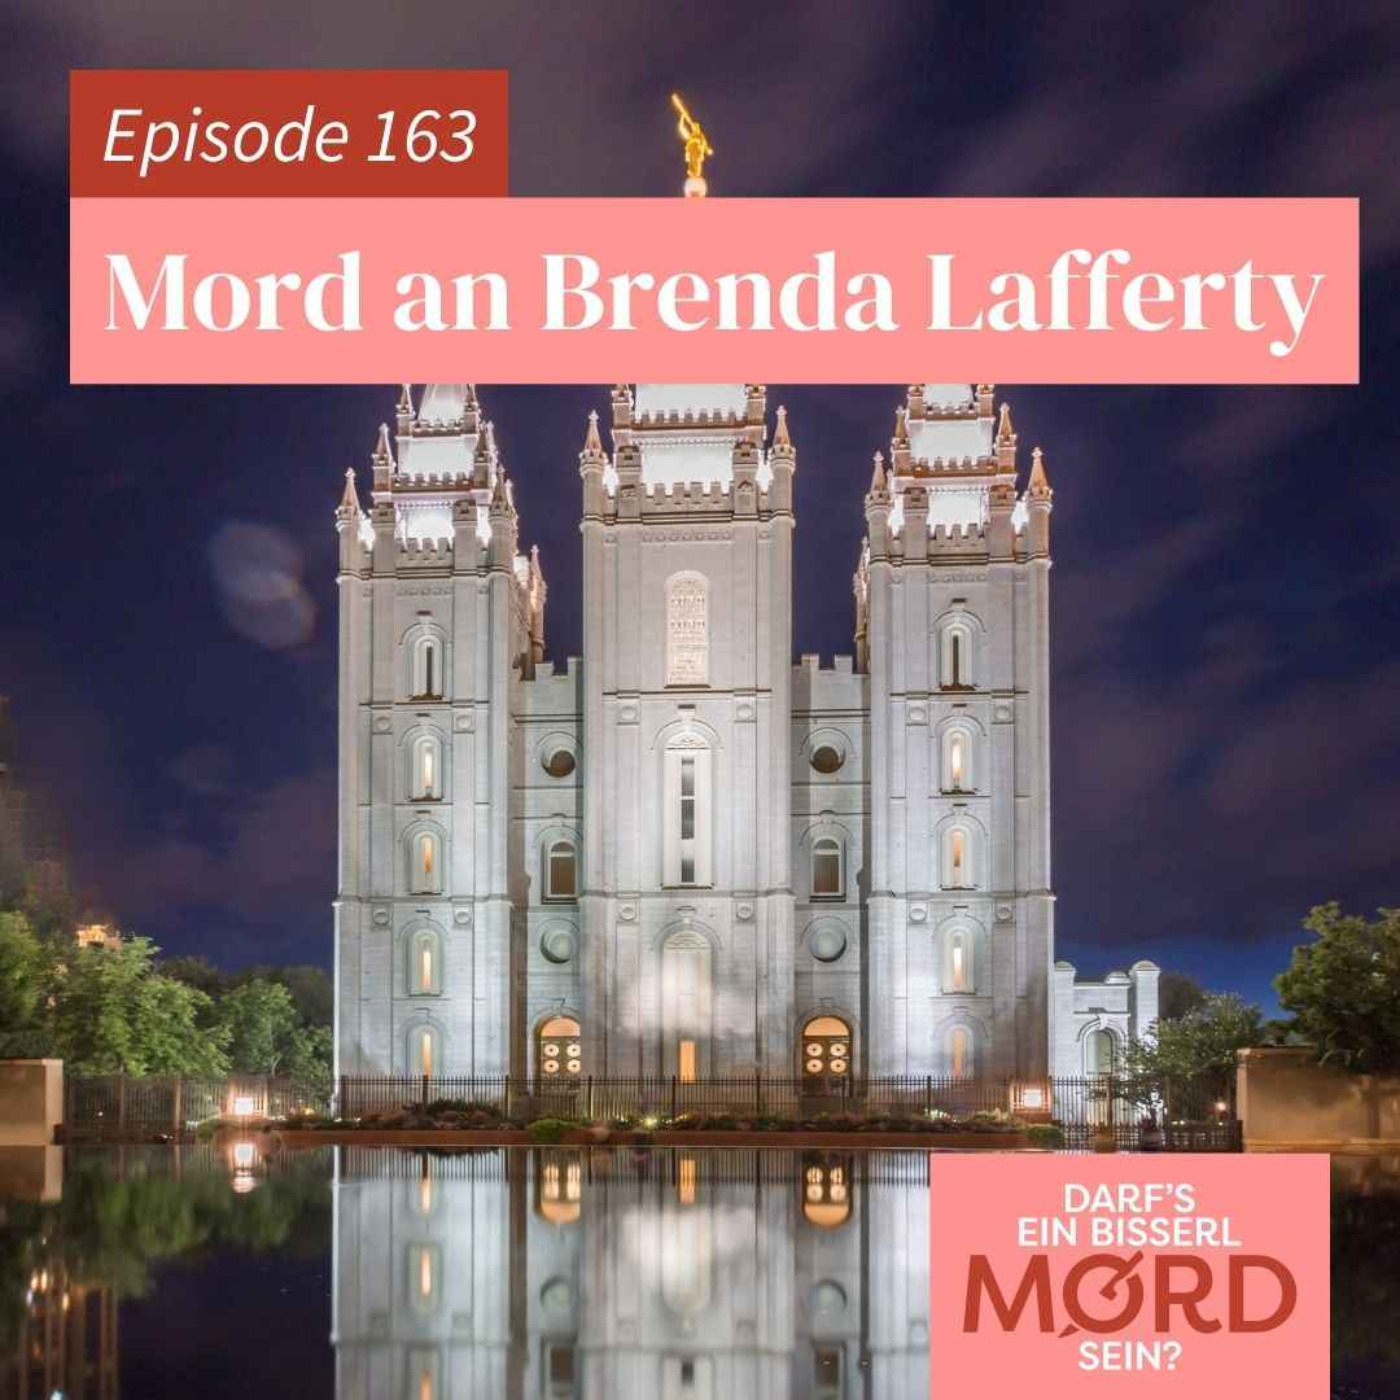 Episode 163: Mord an Brenda Lafferty